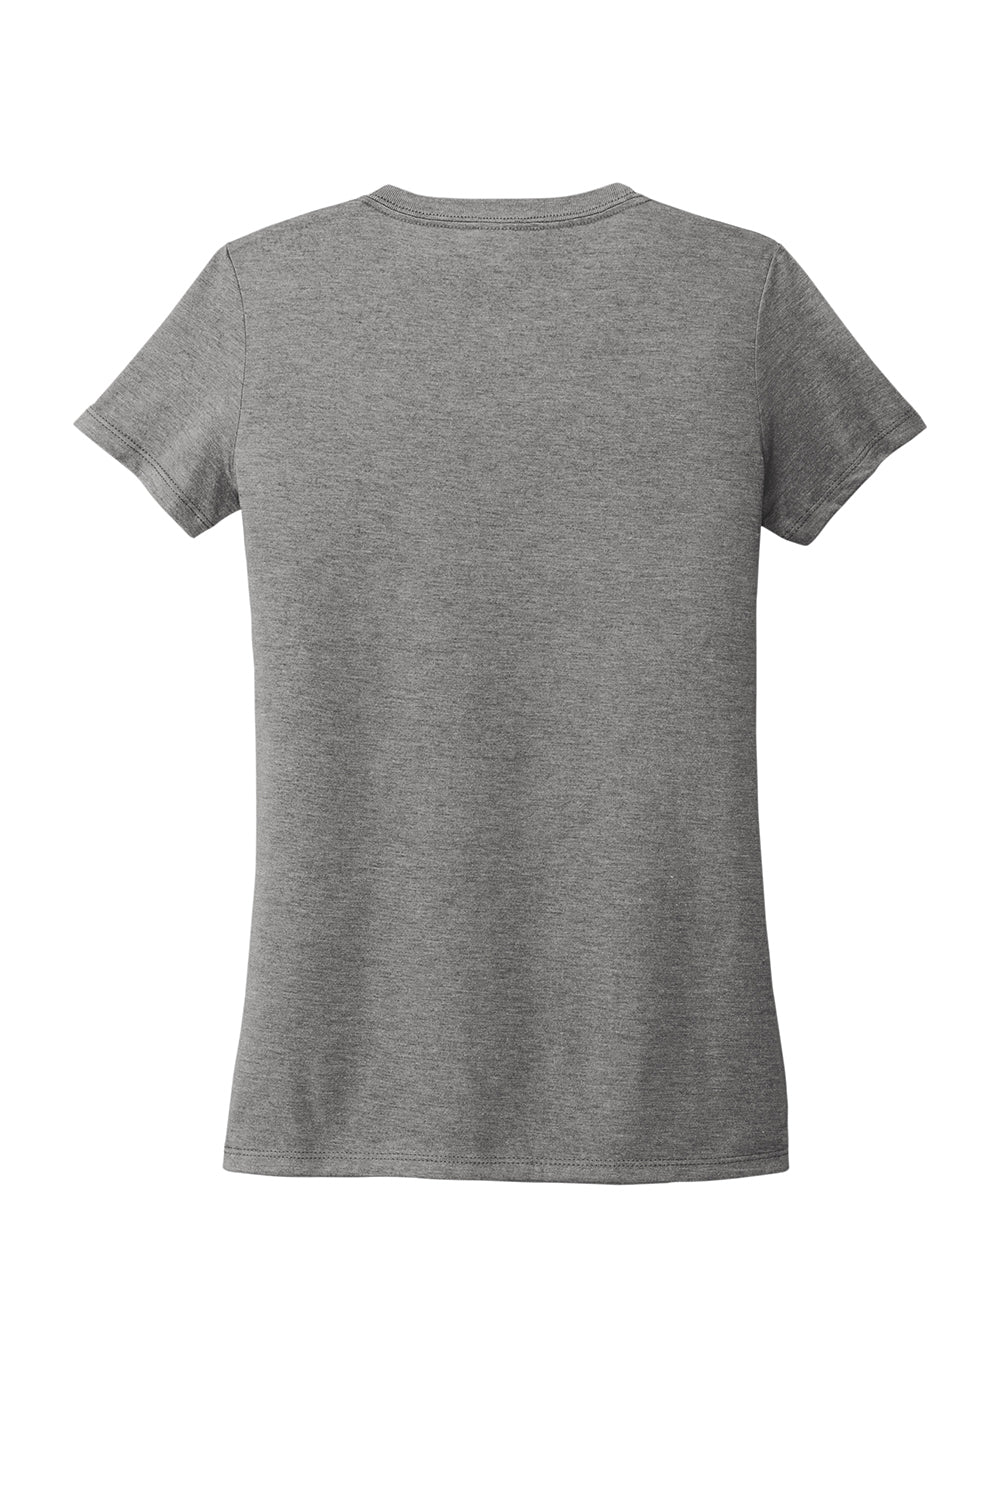 Allmade AL2018 Womens Short Sleeve V-Neck T-Shirt Aluminum Grey Flat Back